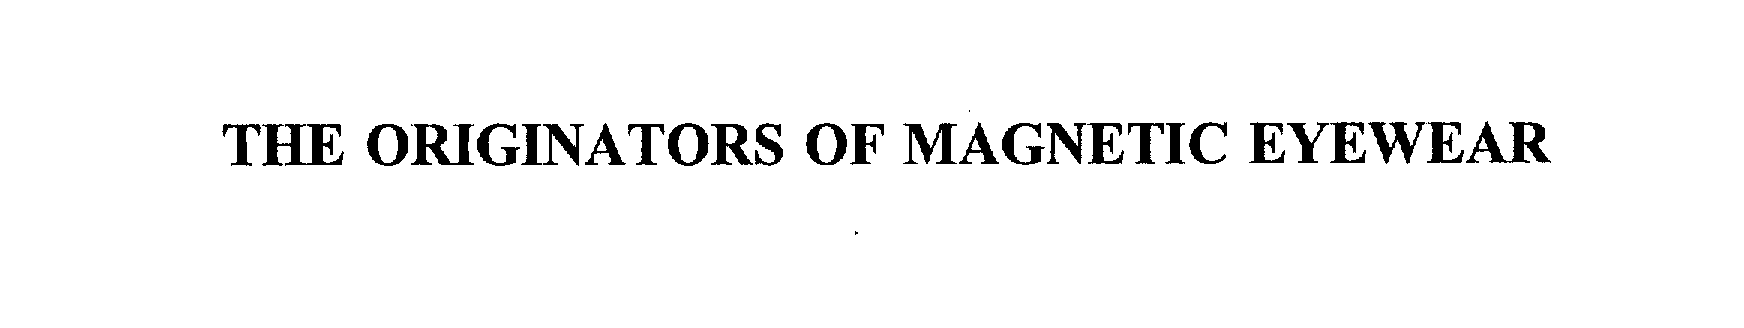  THE ORIGINATORS OF MAGNETIC EYEWEAR